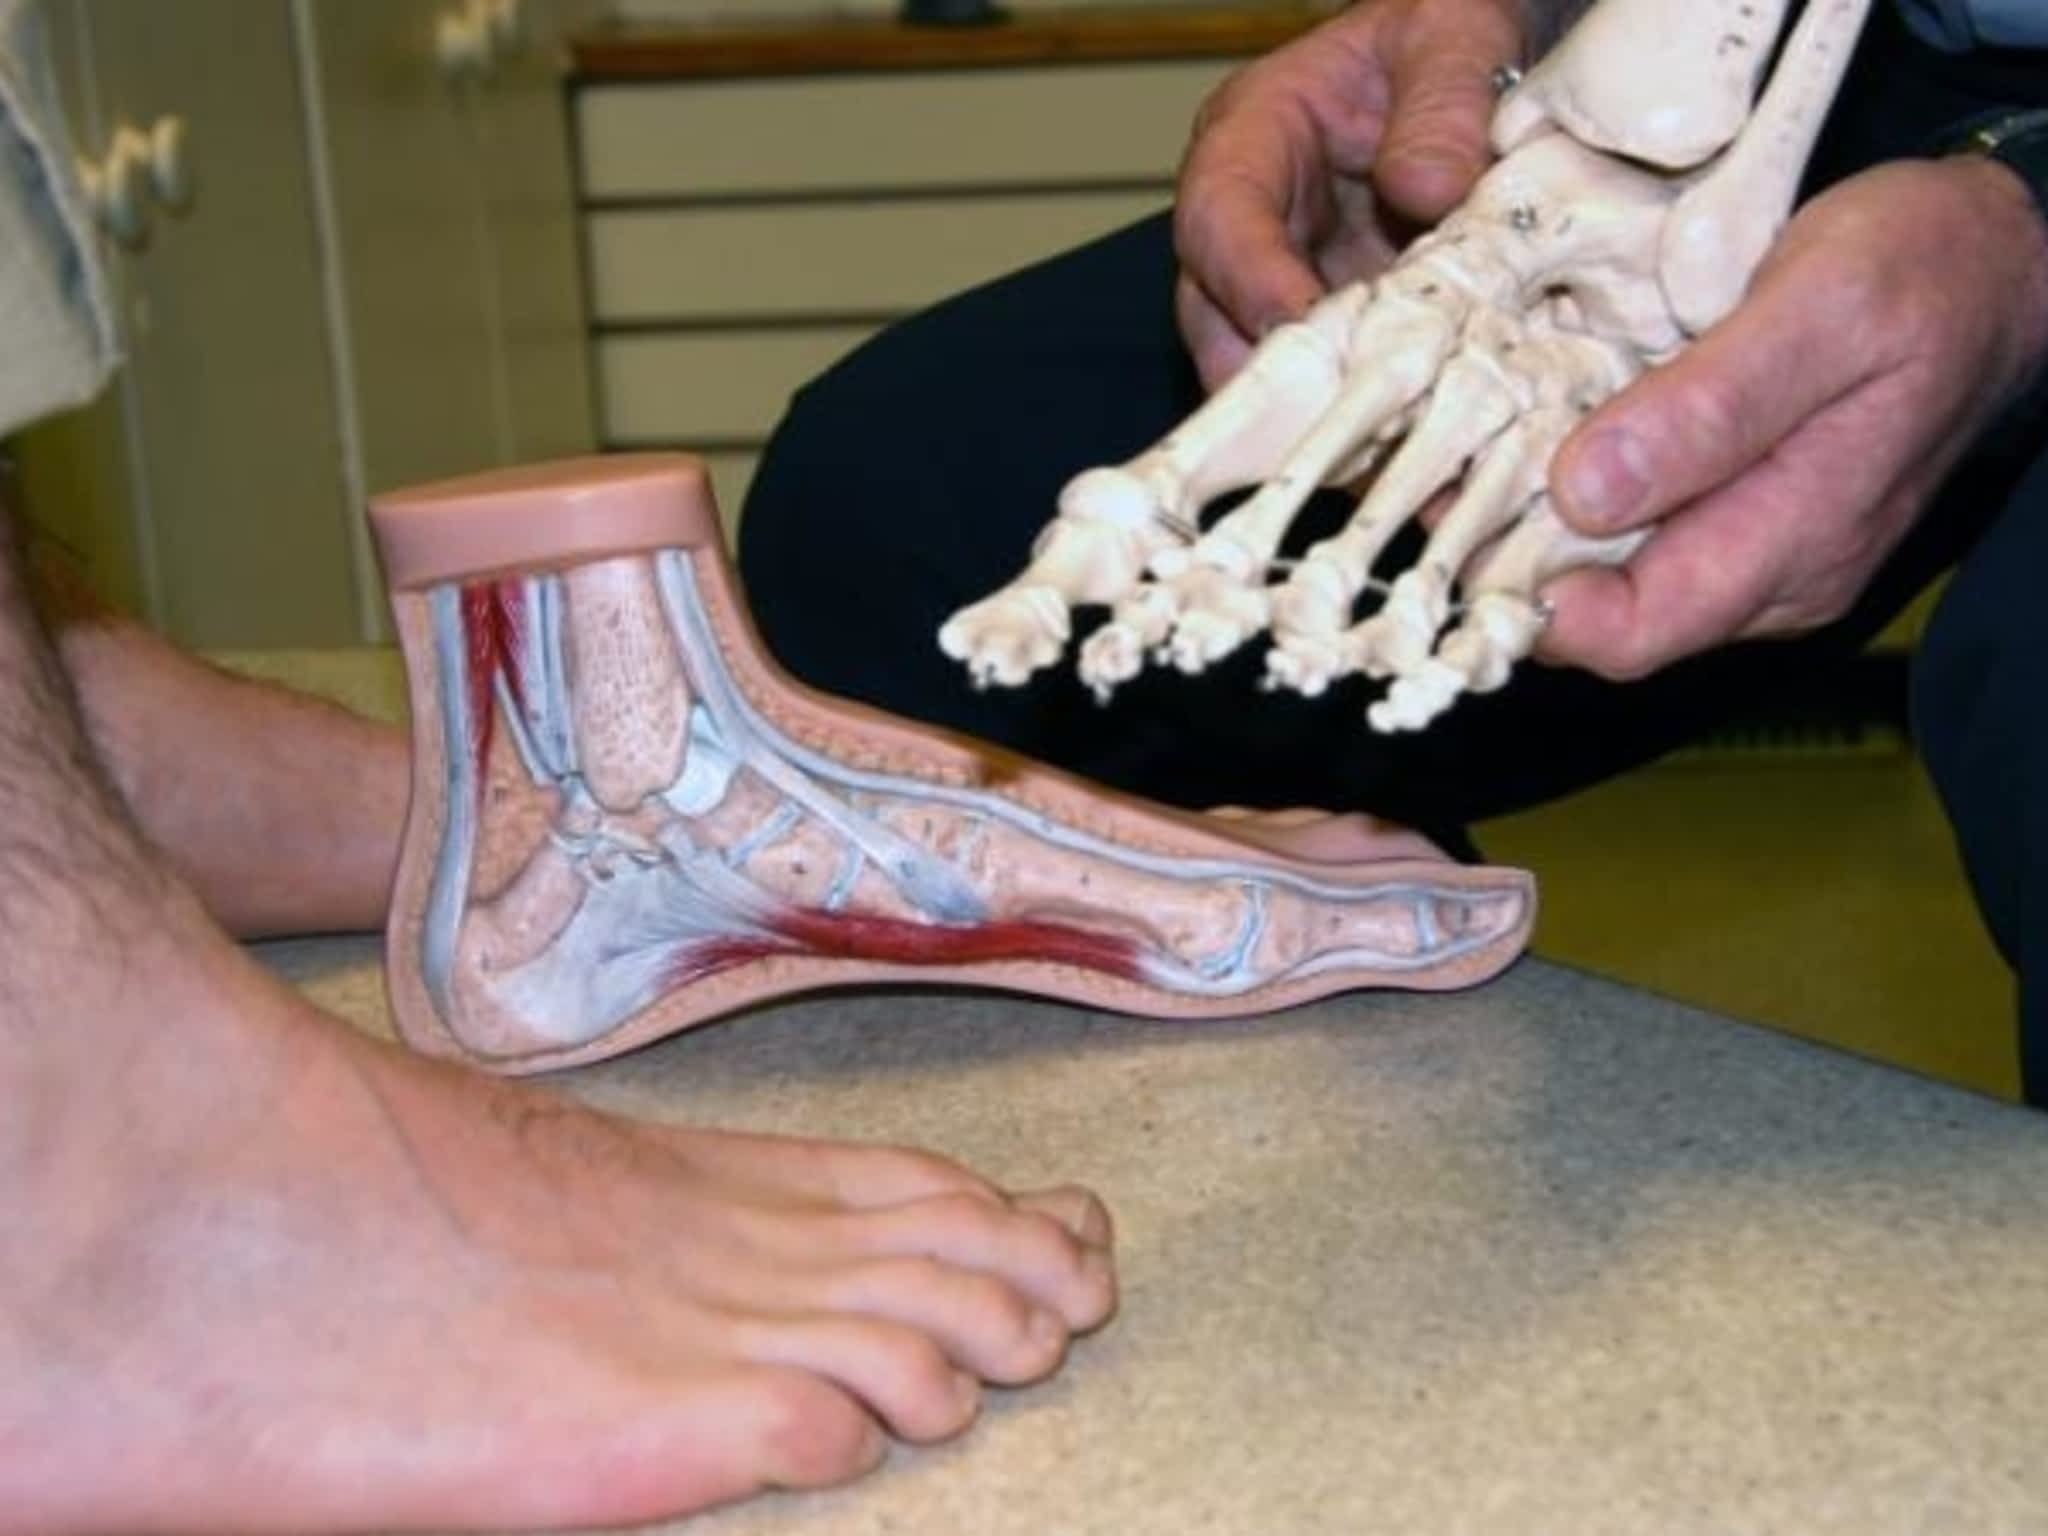 photo Foot Foundation - Custom Orthopedic Shoes